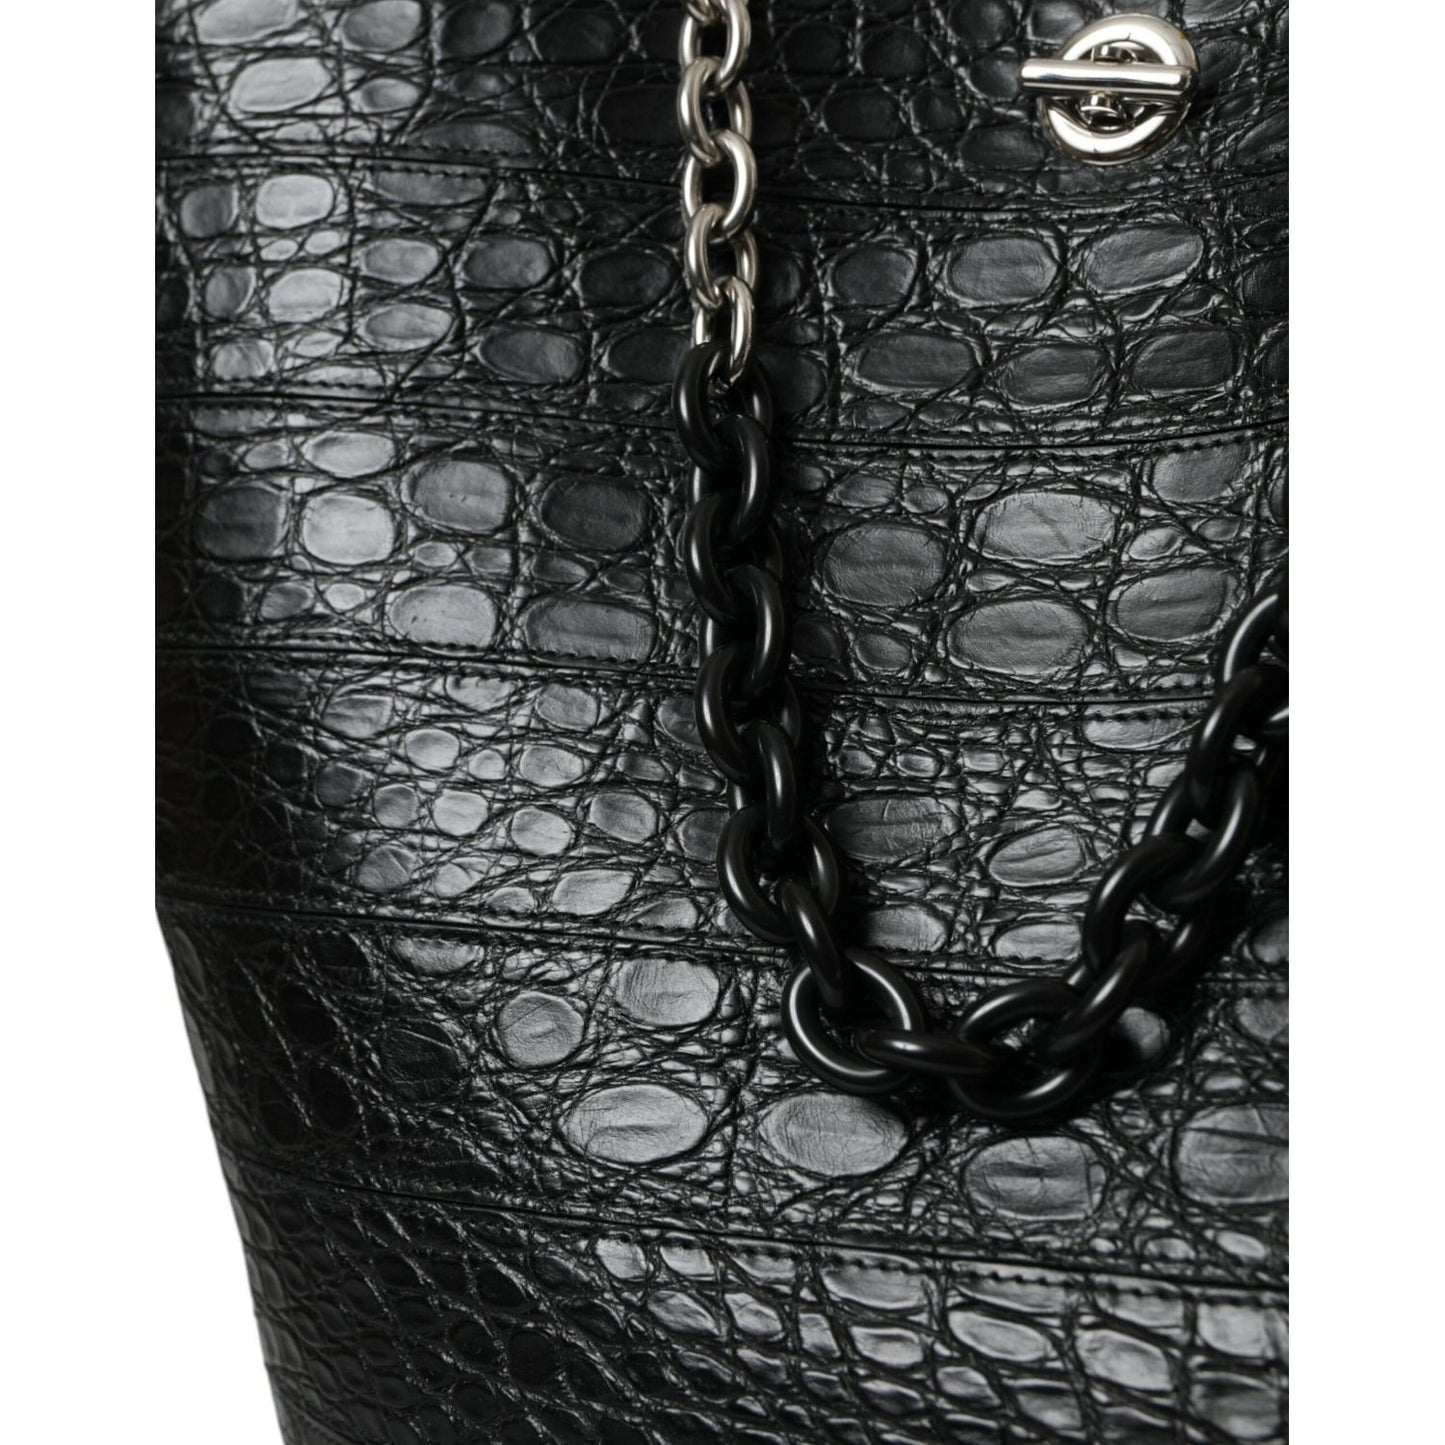 Balenciaga Elegant Black Crocodile Leather Maxi Bucket Bag elegant-black-crocodile-leather-maxi-bucket-bag